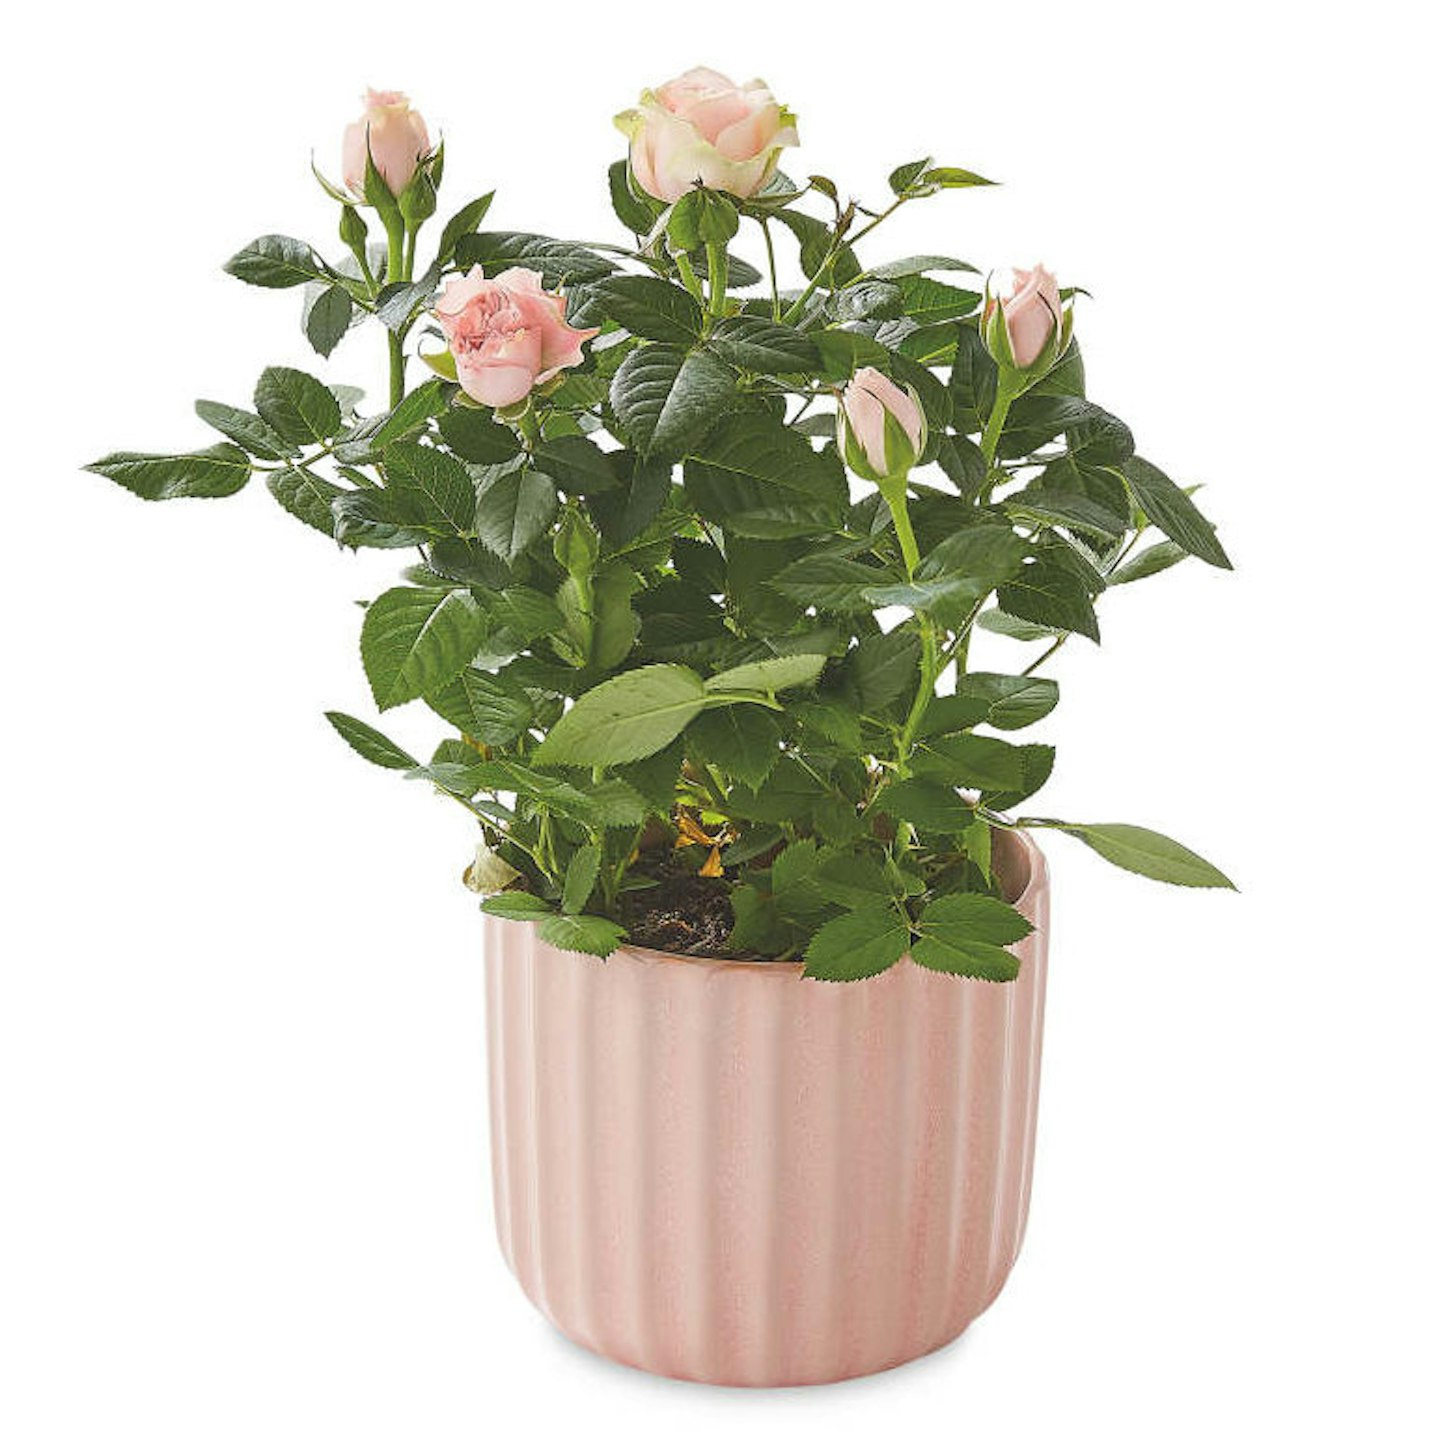 Flowering Rose In Ceramic Pot